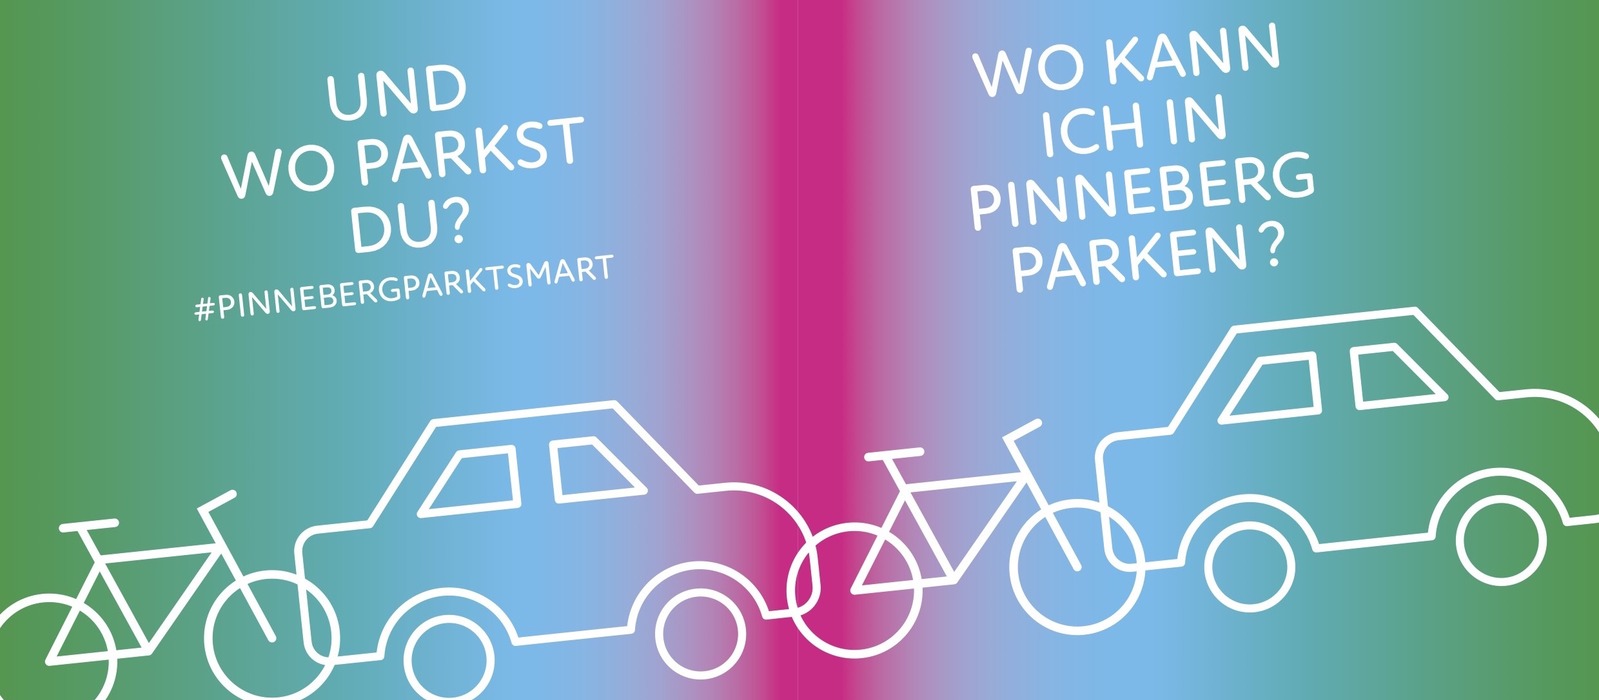 Parkplätze (Auto & Rad) in der City